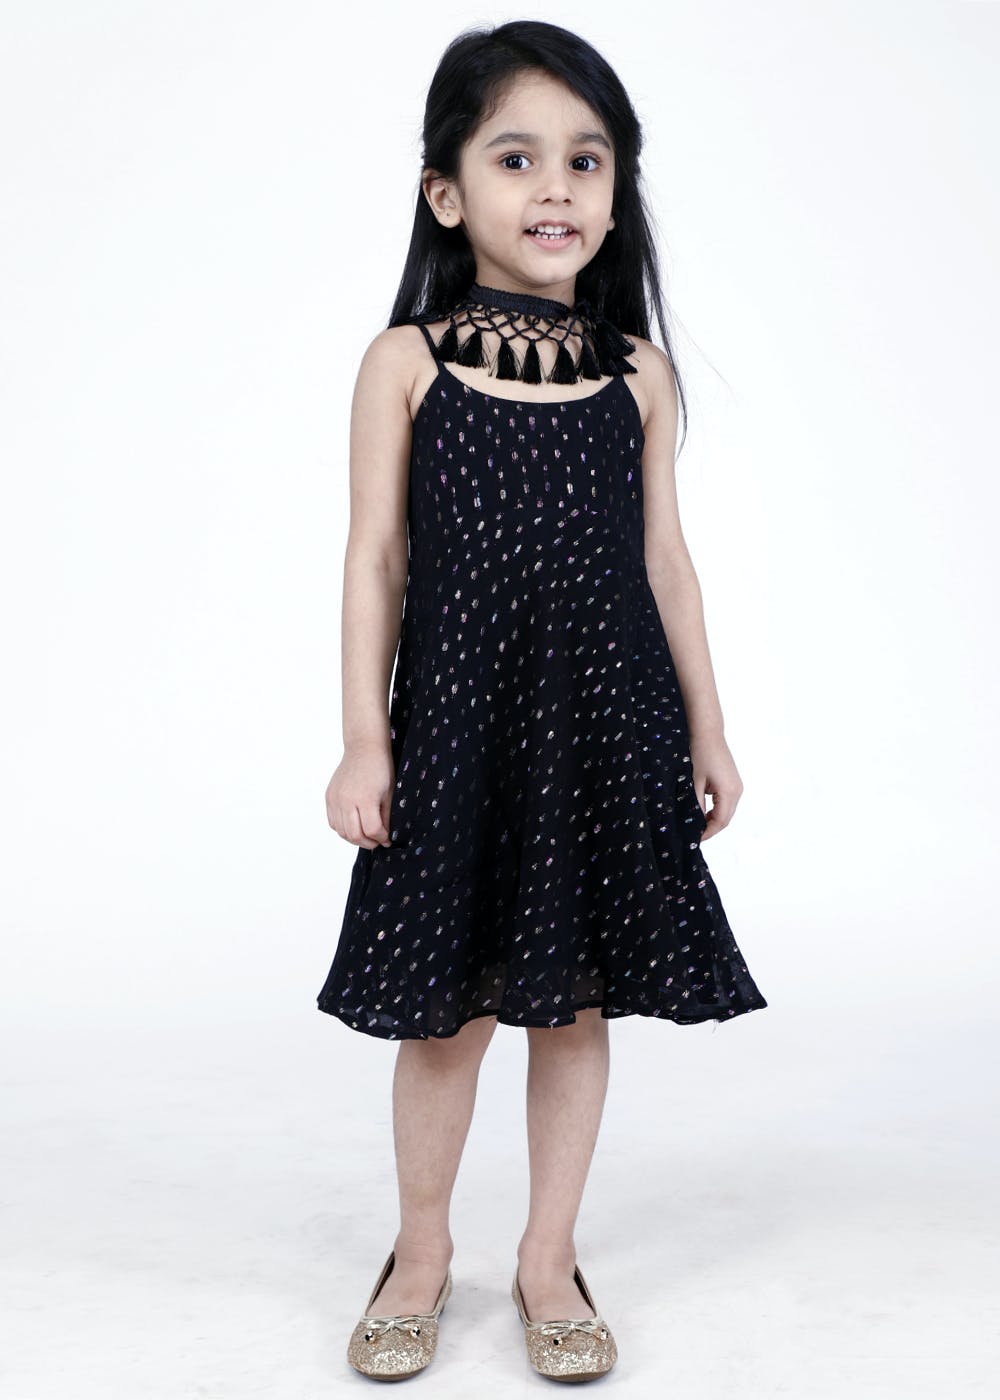 ladkiyon ki stylish dress//.छोटी लड़कियों की प्यारी प्यारी ड्रेस//. baby ki  dress design..// Frock.. - YouTube